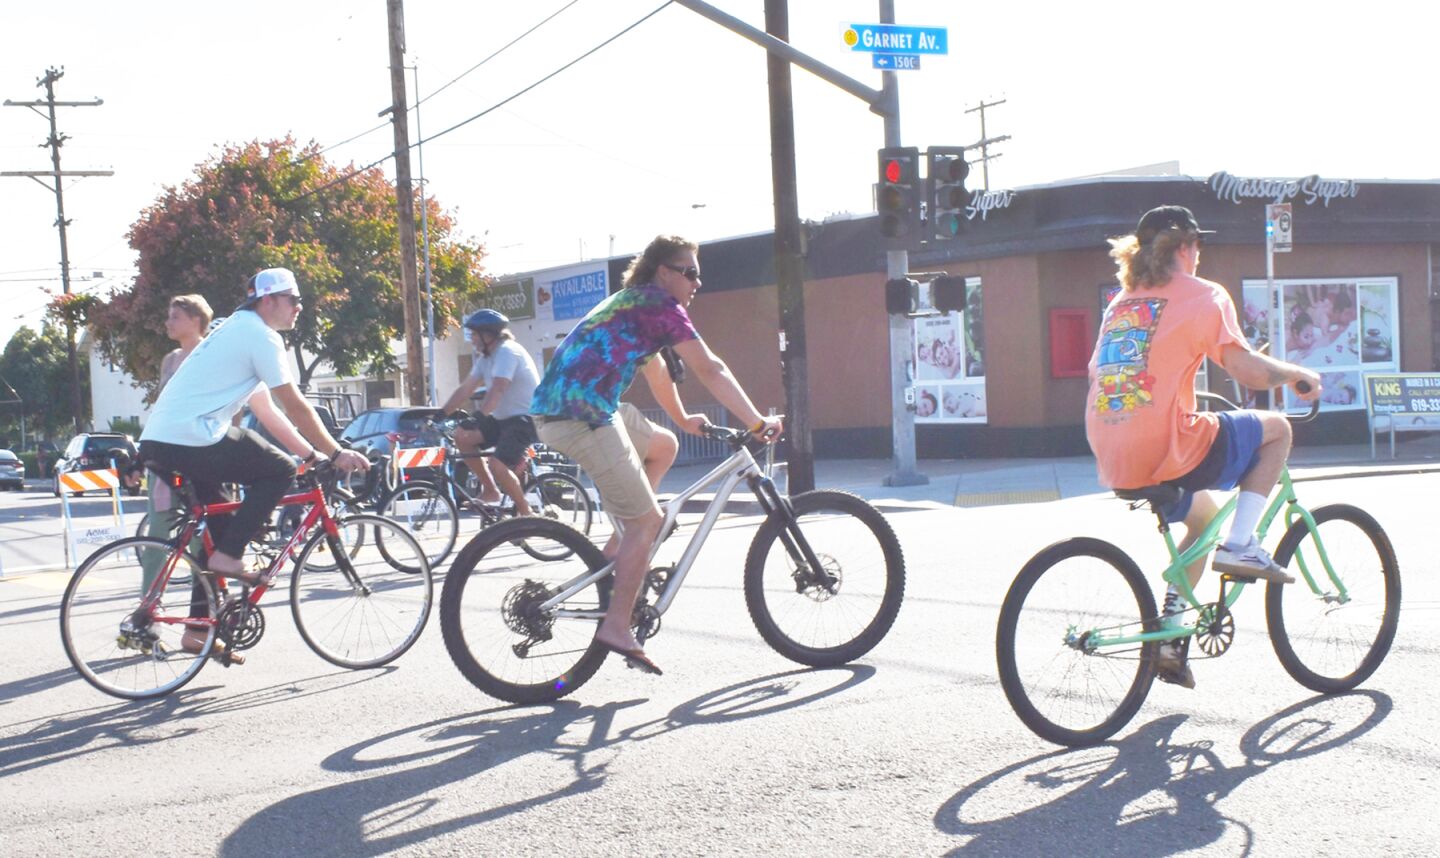 Bicyclists traveling along Garnet Avenue.